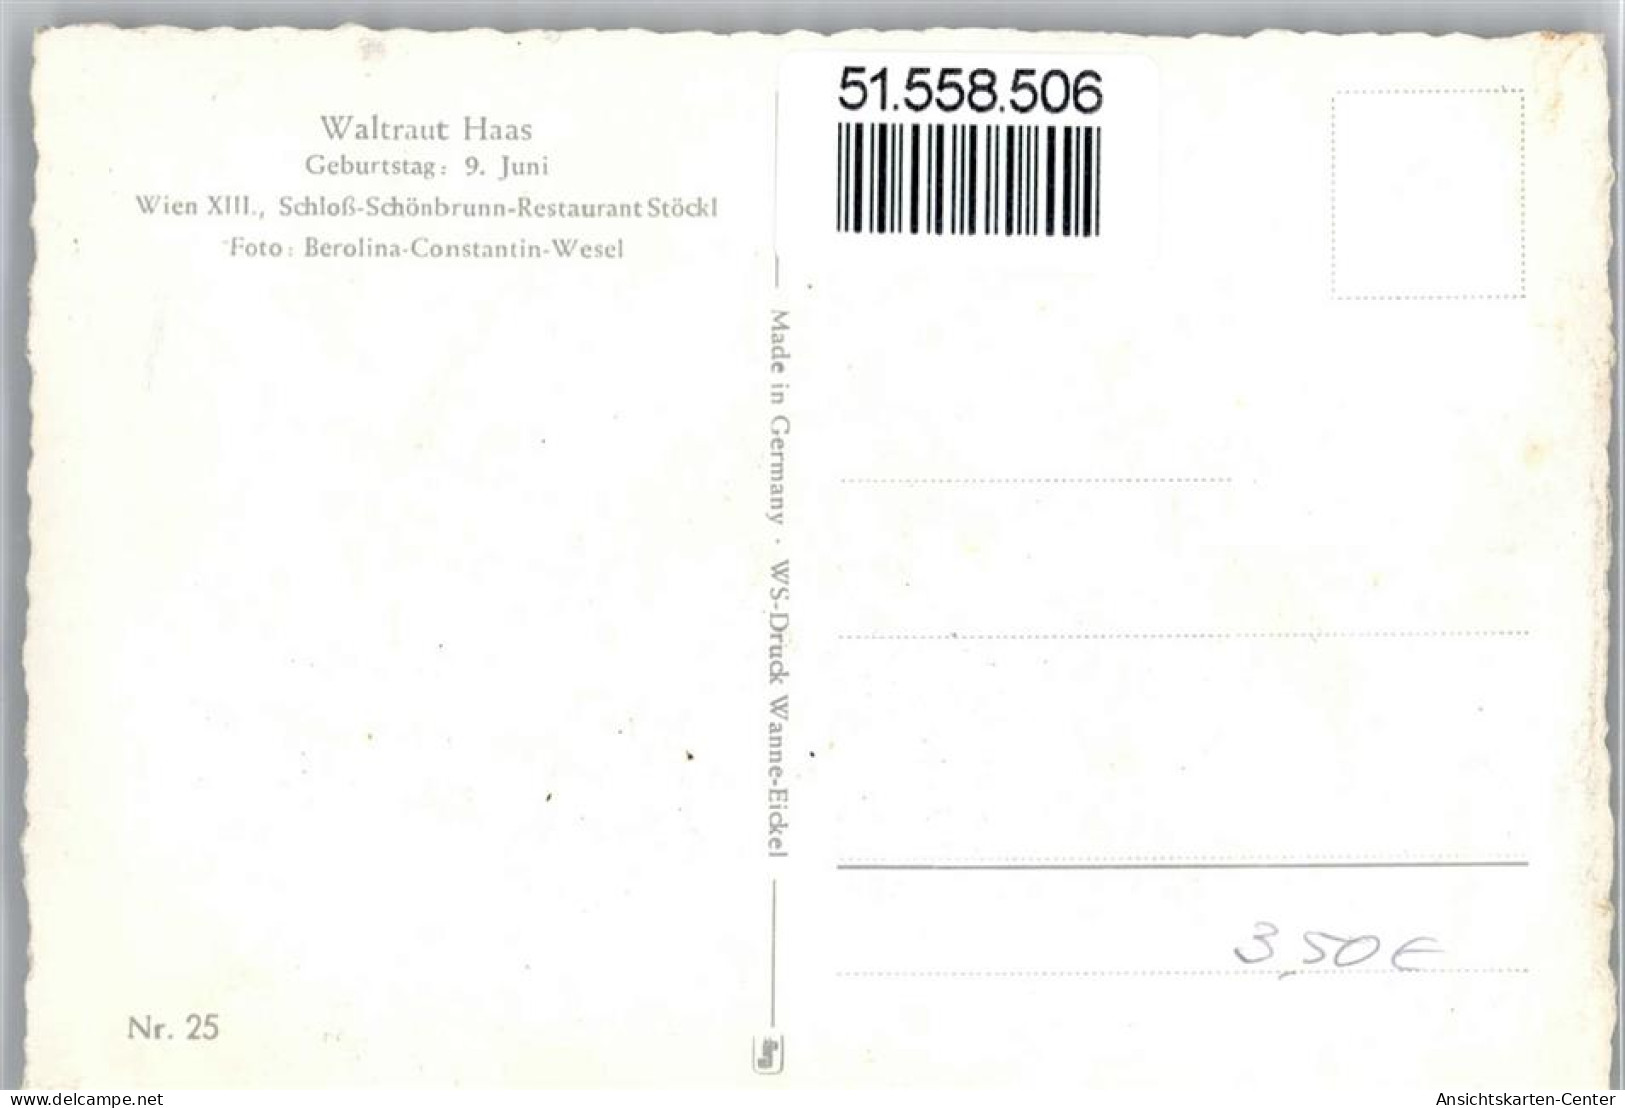 51558506 - Haas, Waltraut - Schauspieler